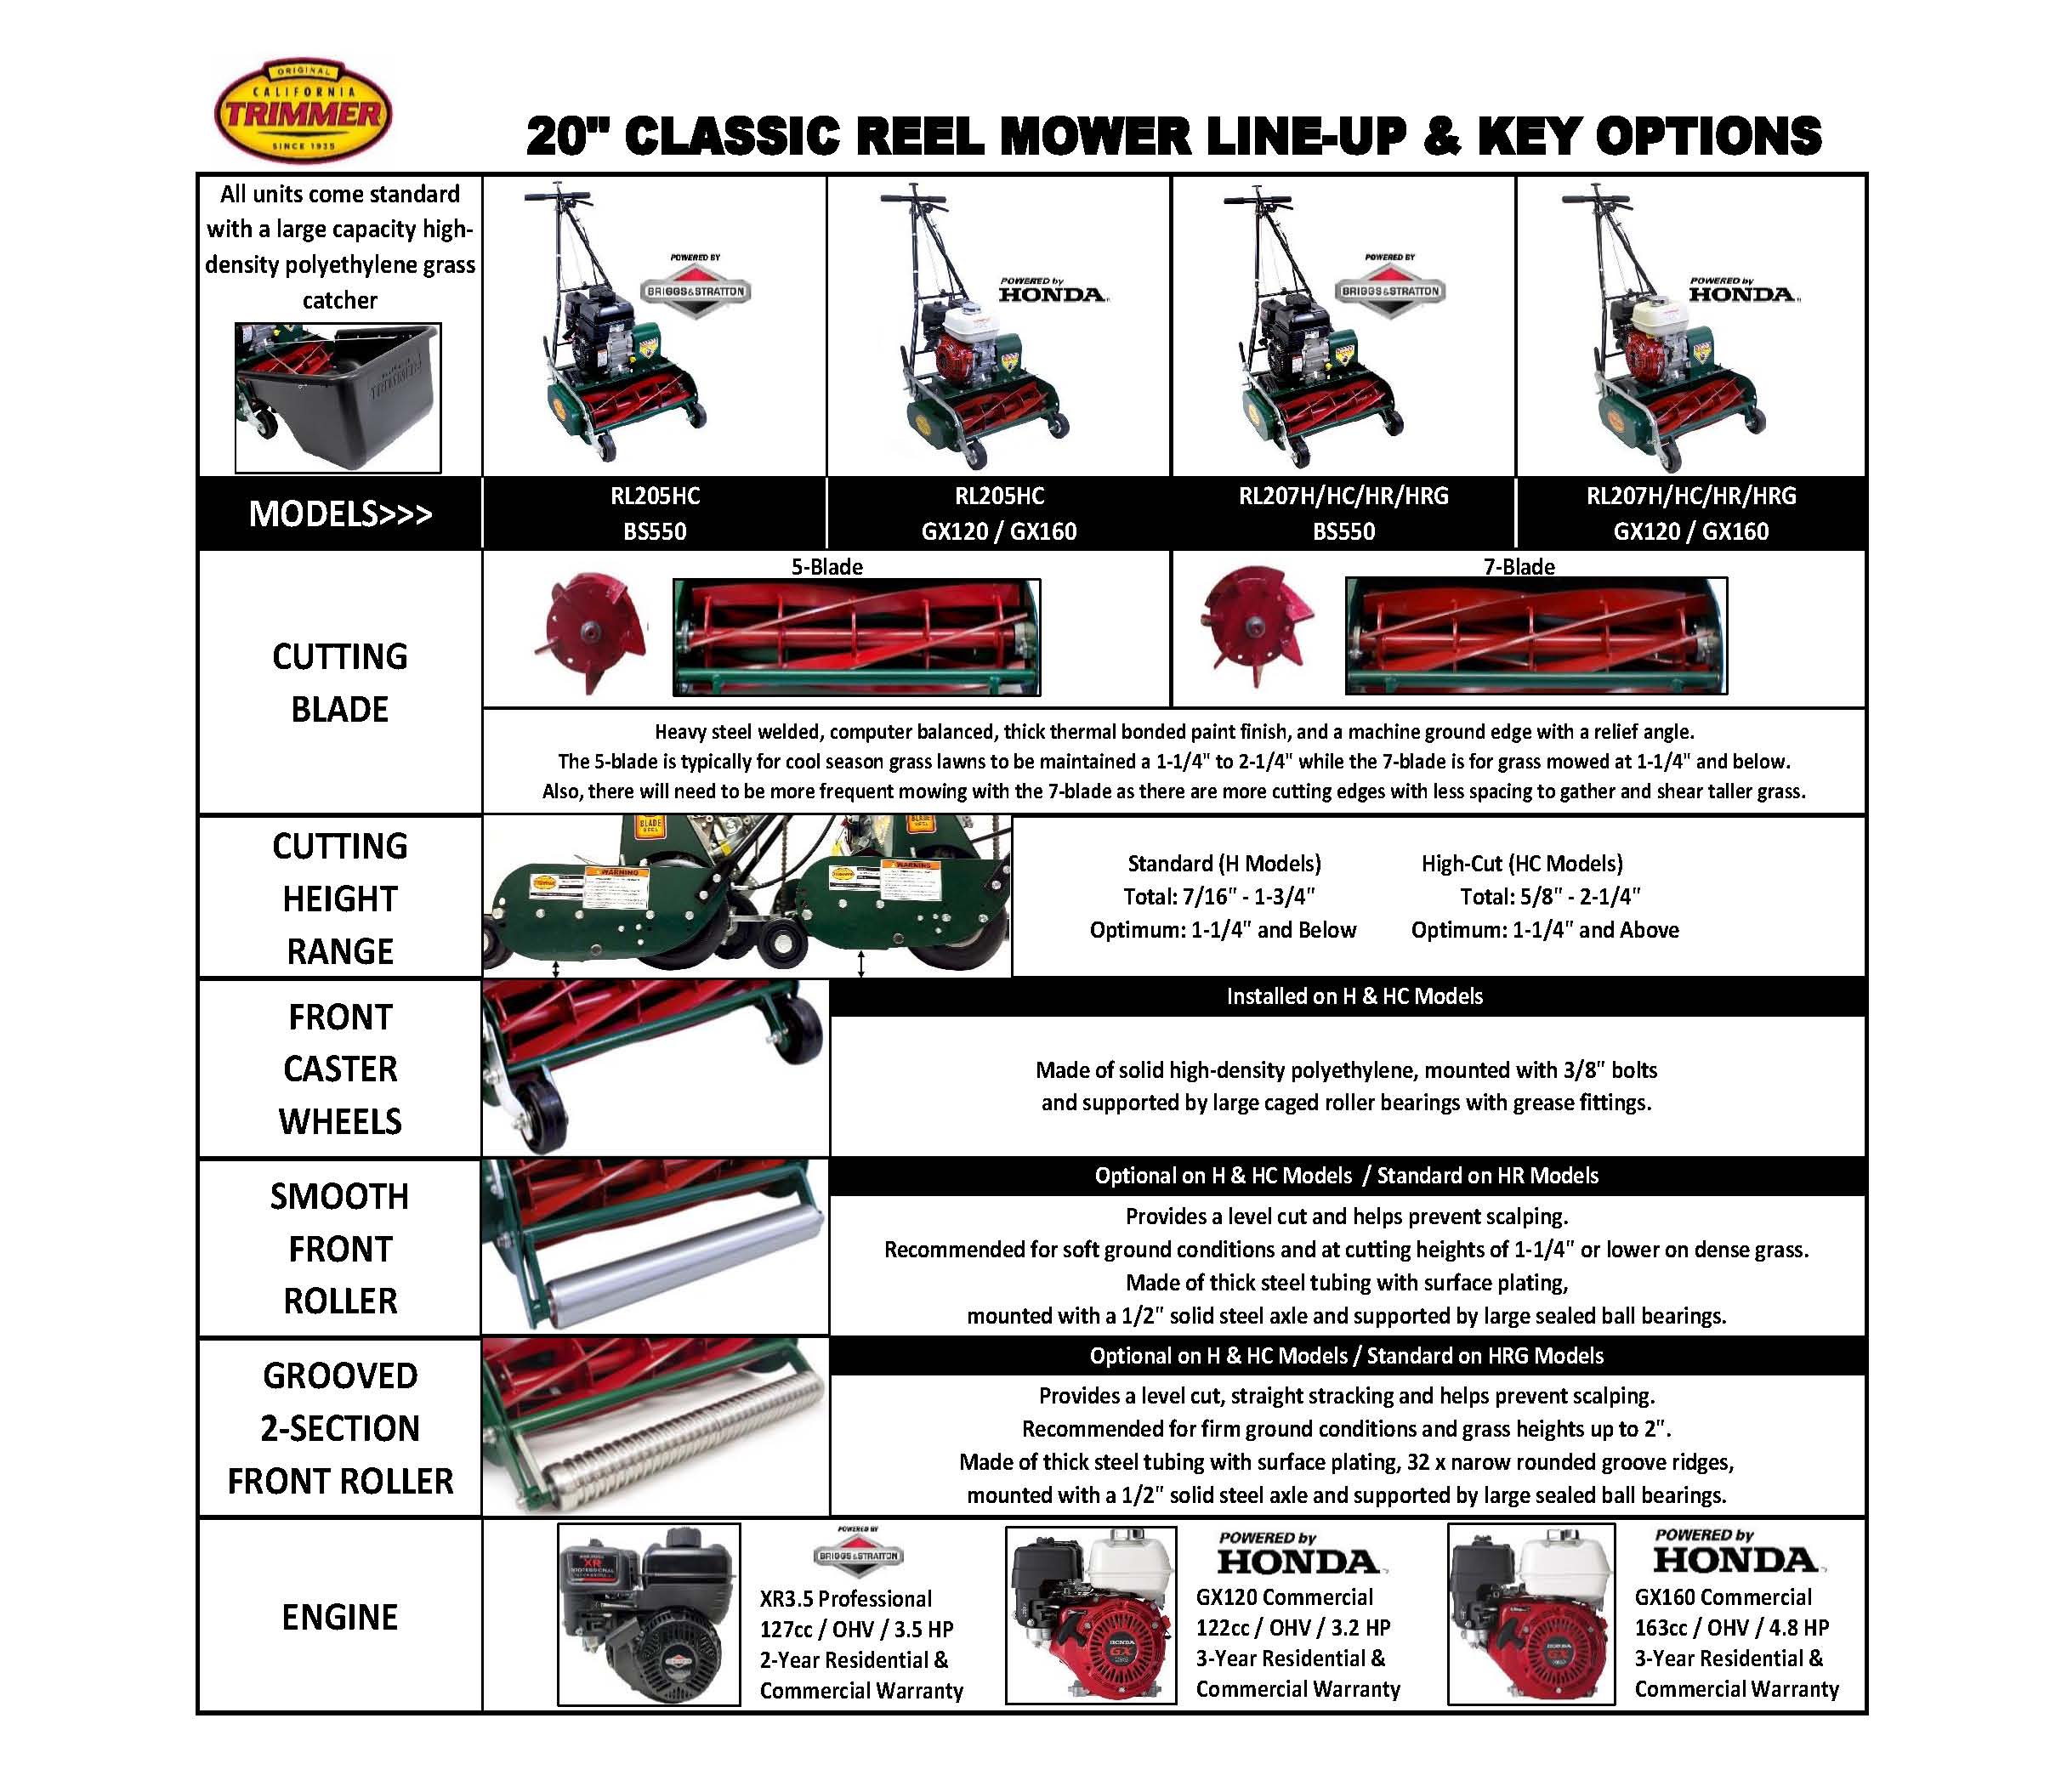 California Trimmer – RL20H/HC - 20 Classic Reel Mower